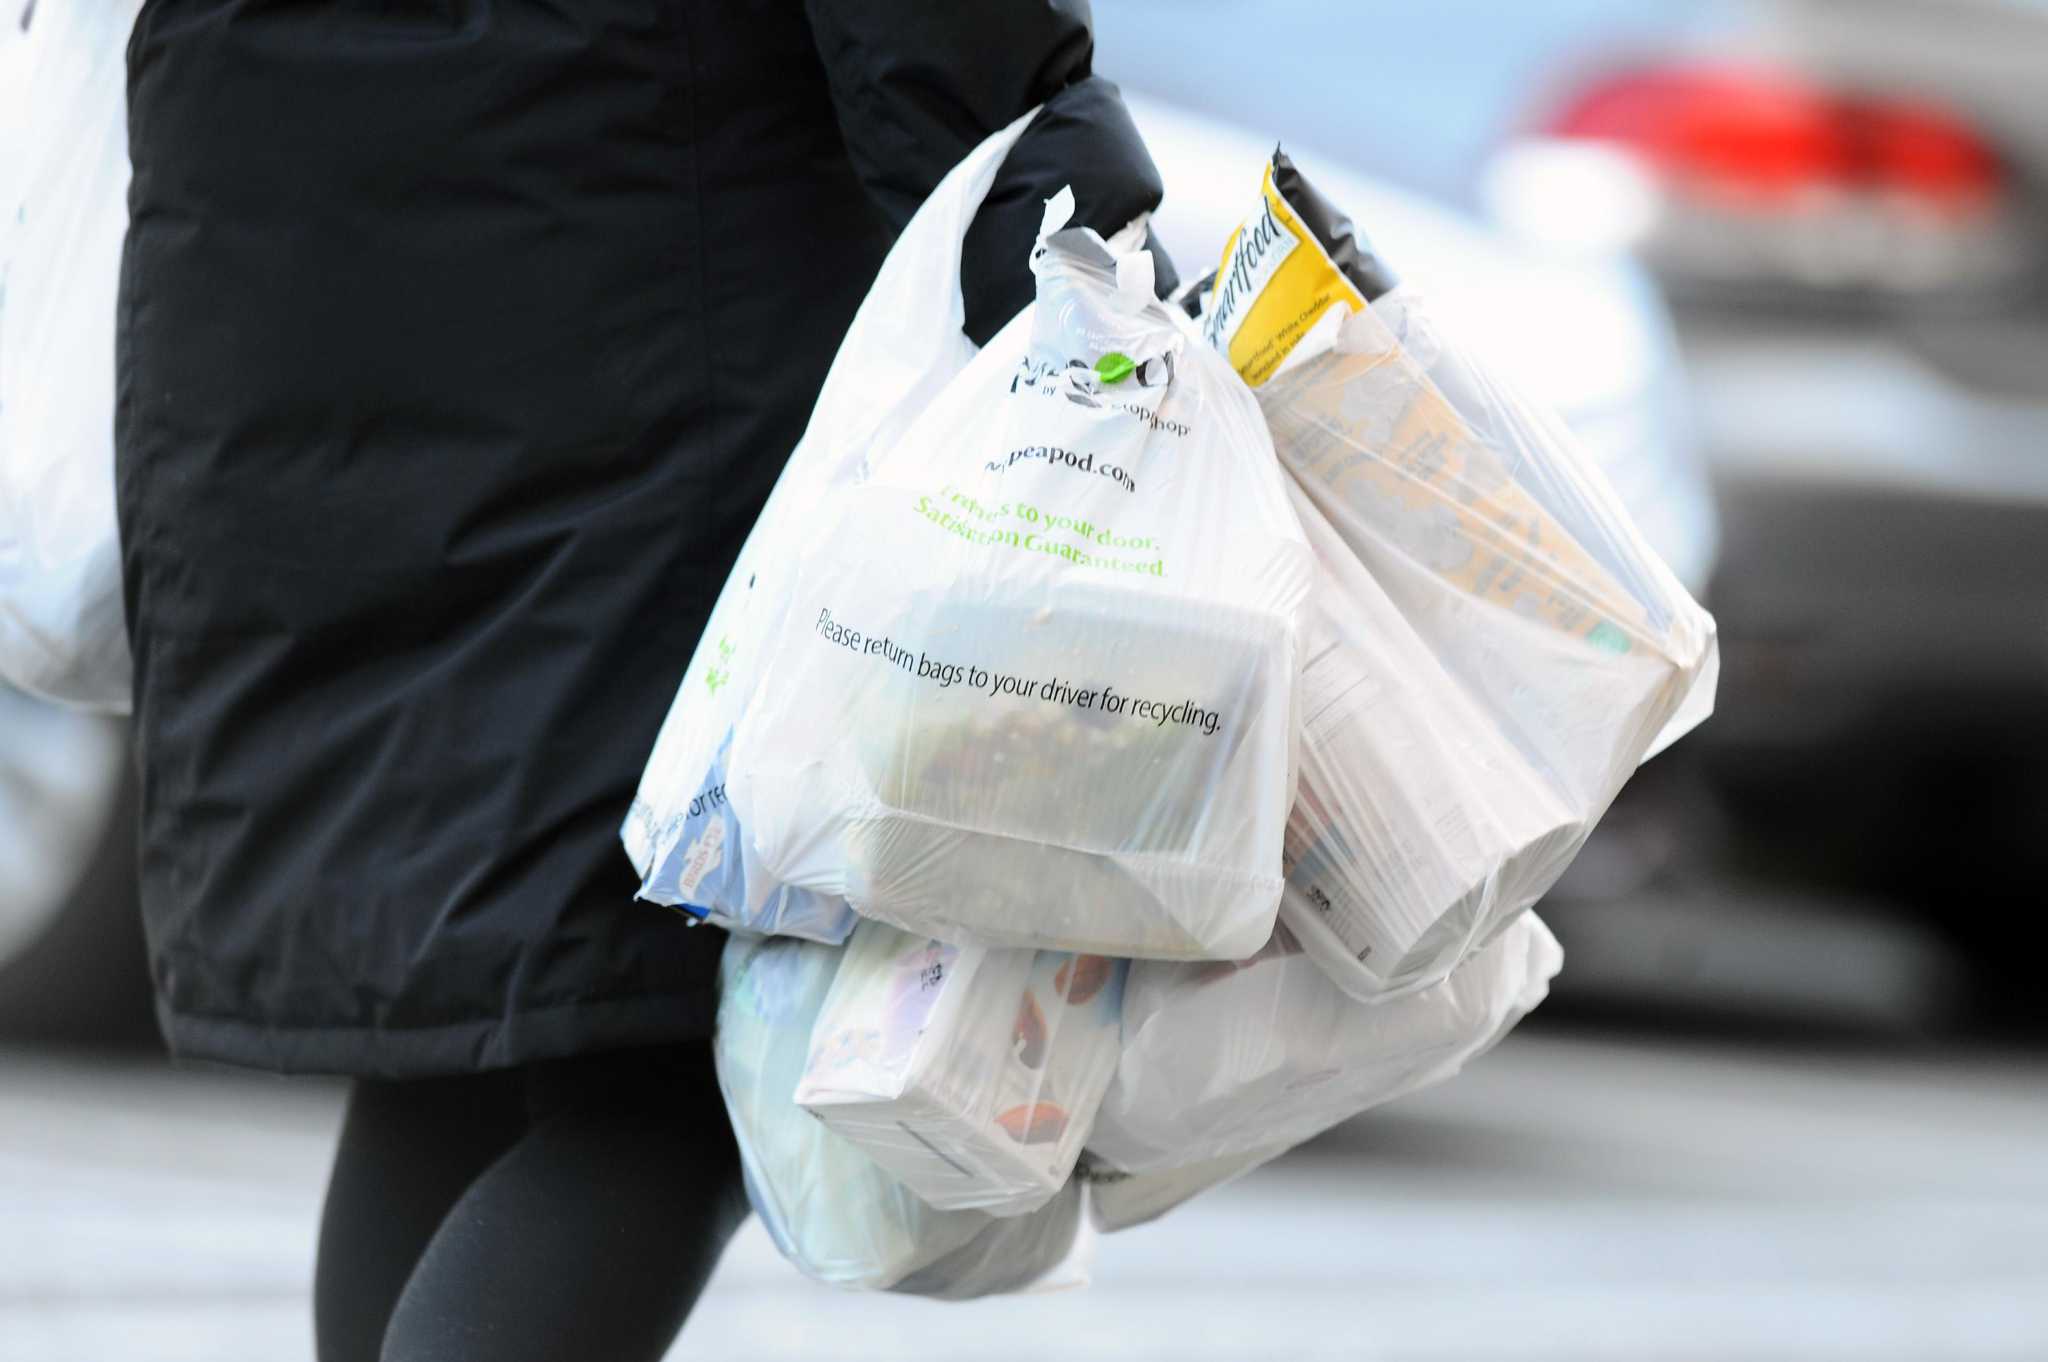 Stamford lawmakers seek to ban use of plastic bags - StamfordAdvocate